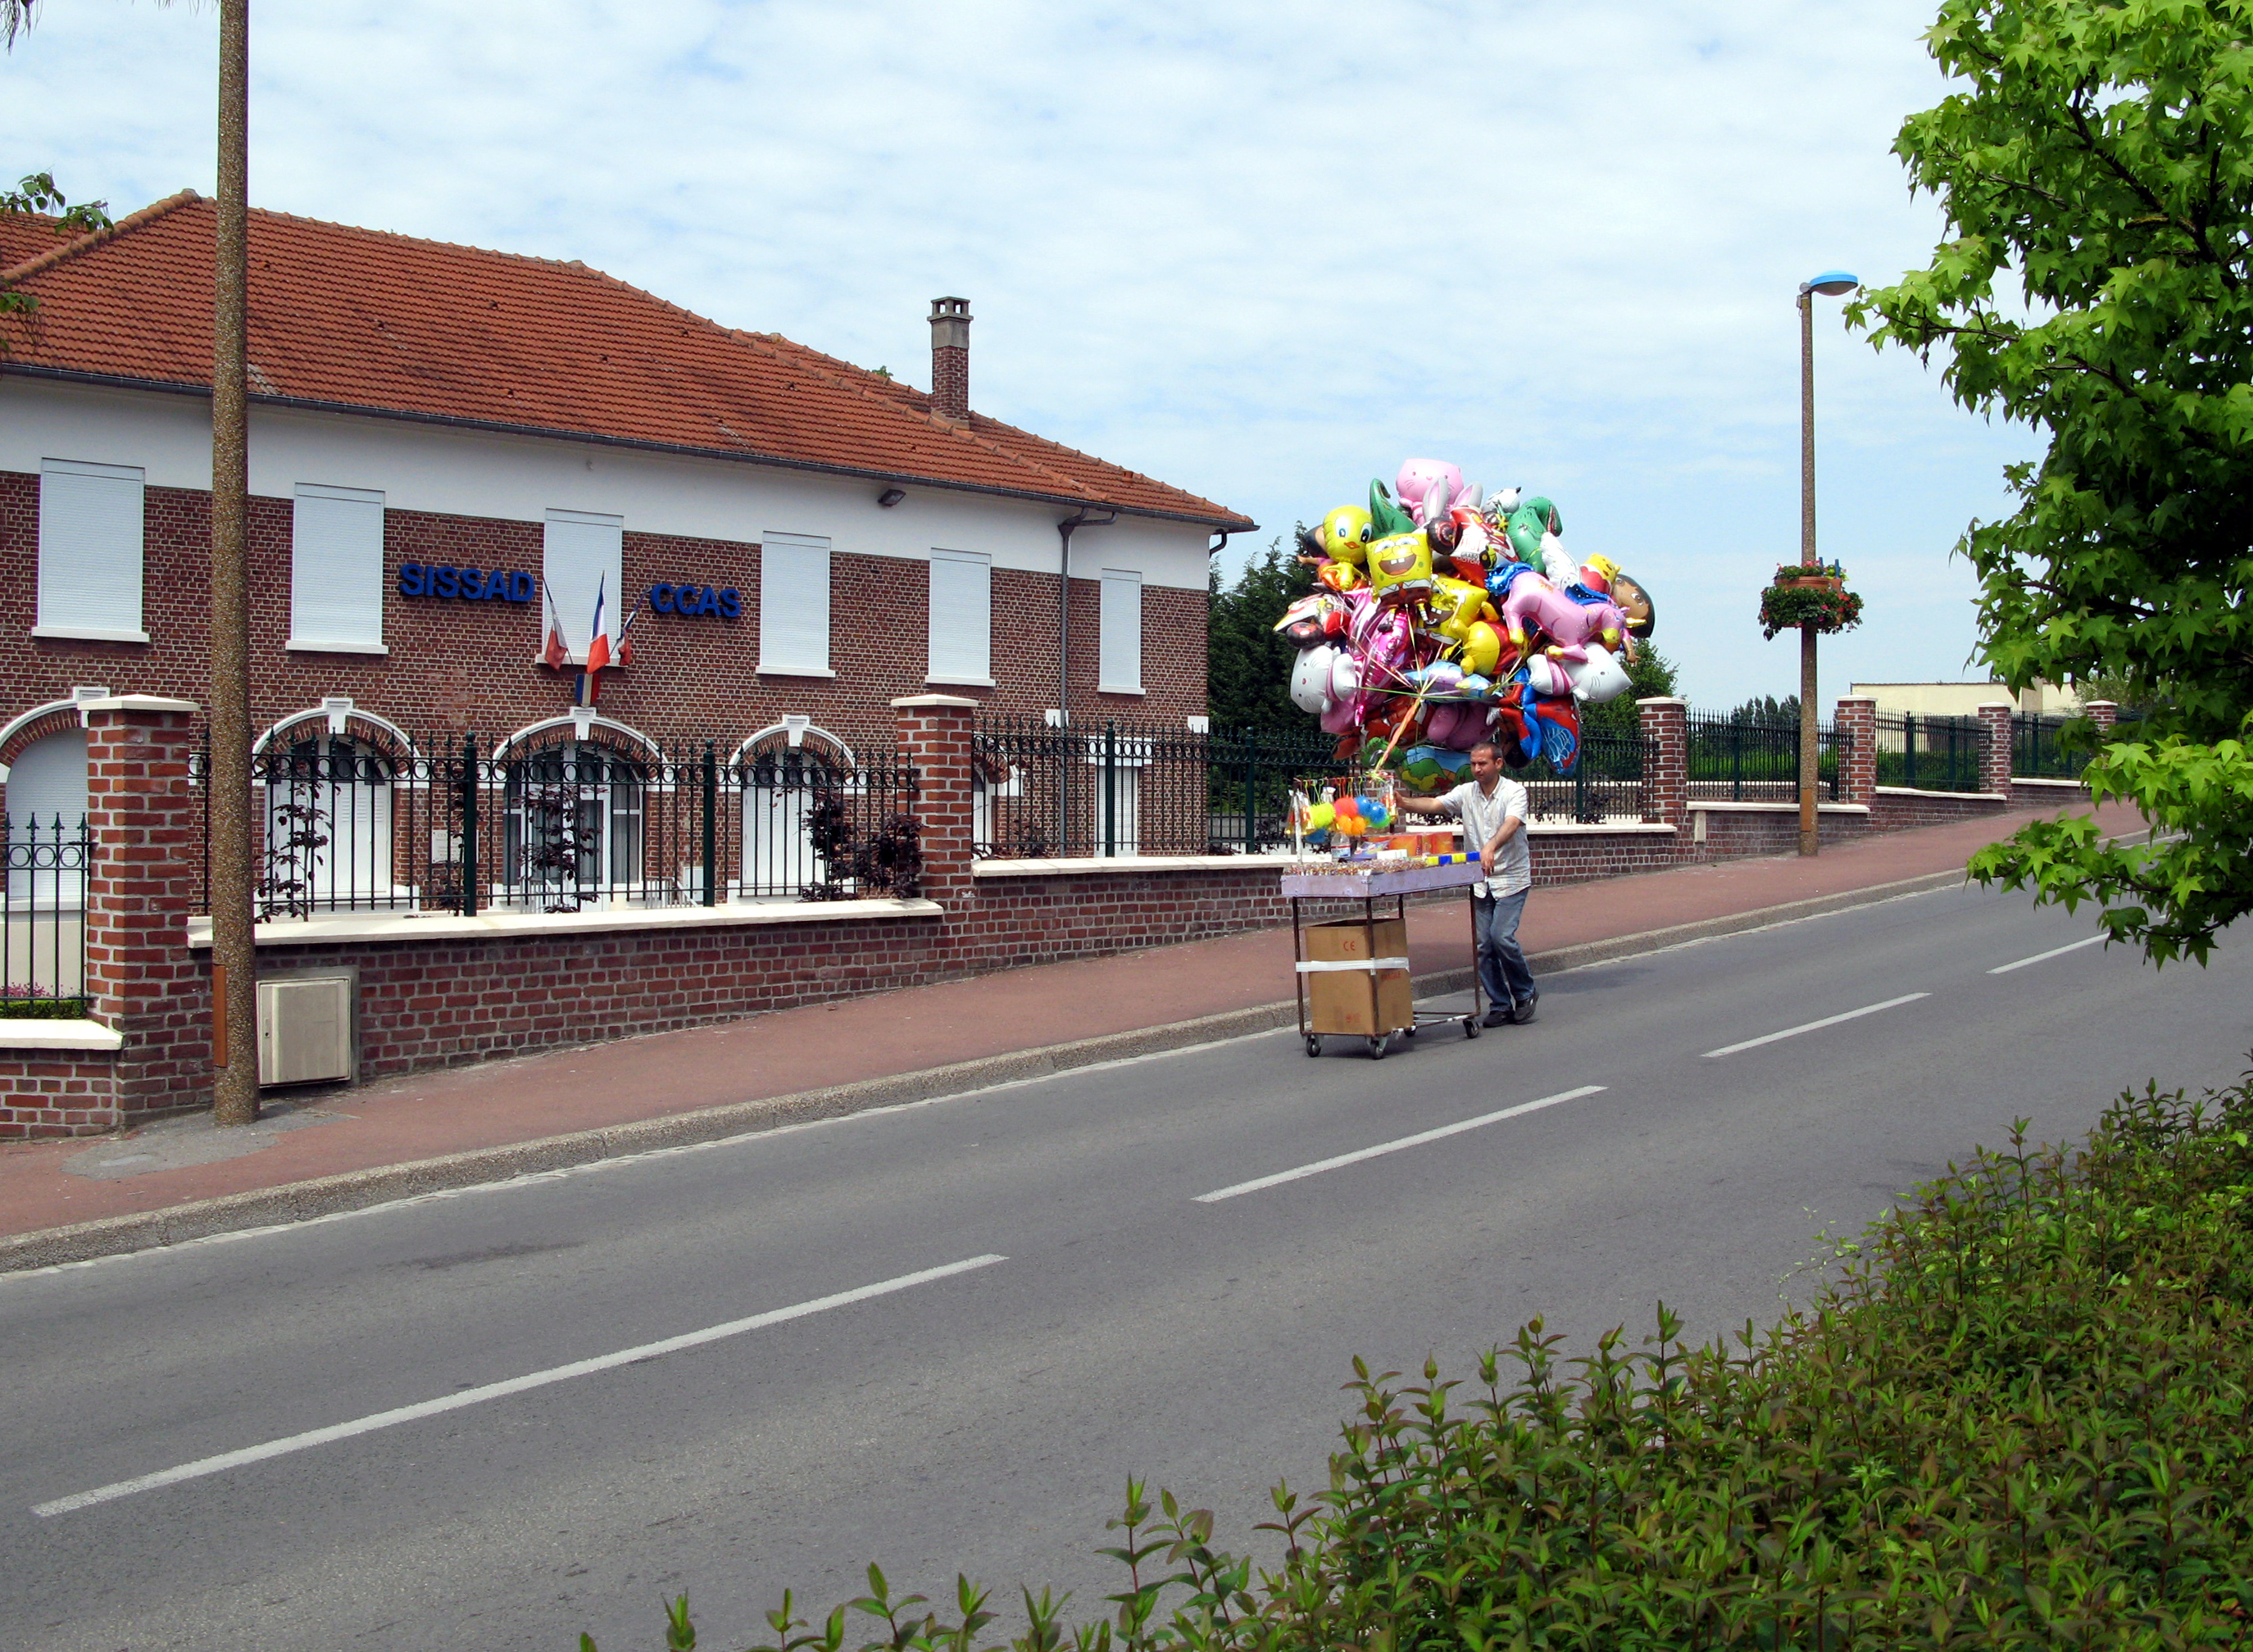 File:Marchand de ballons.jpg - Wikimedia Commons